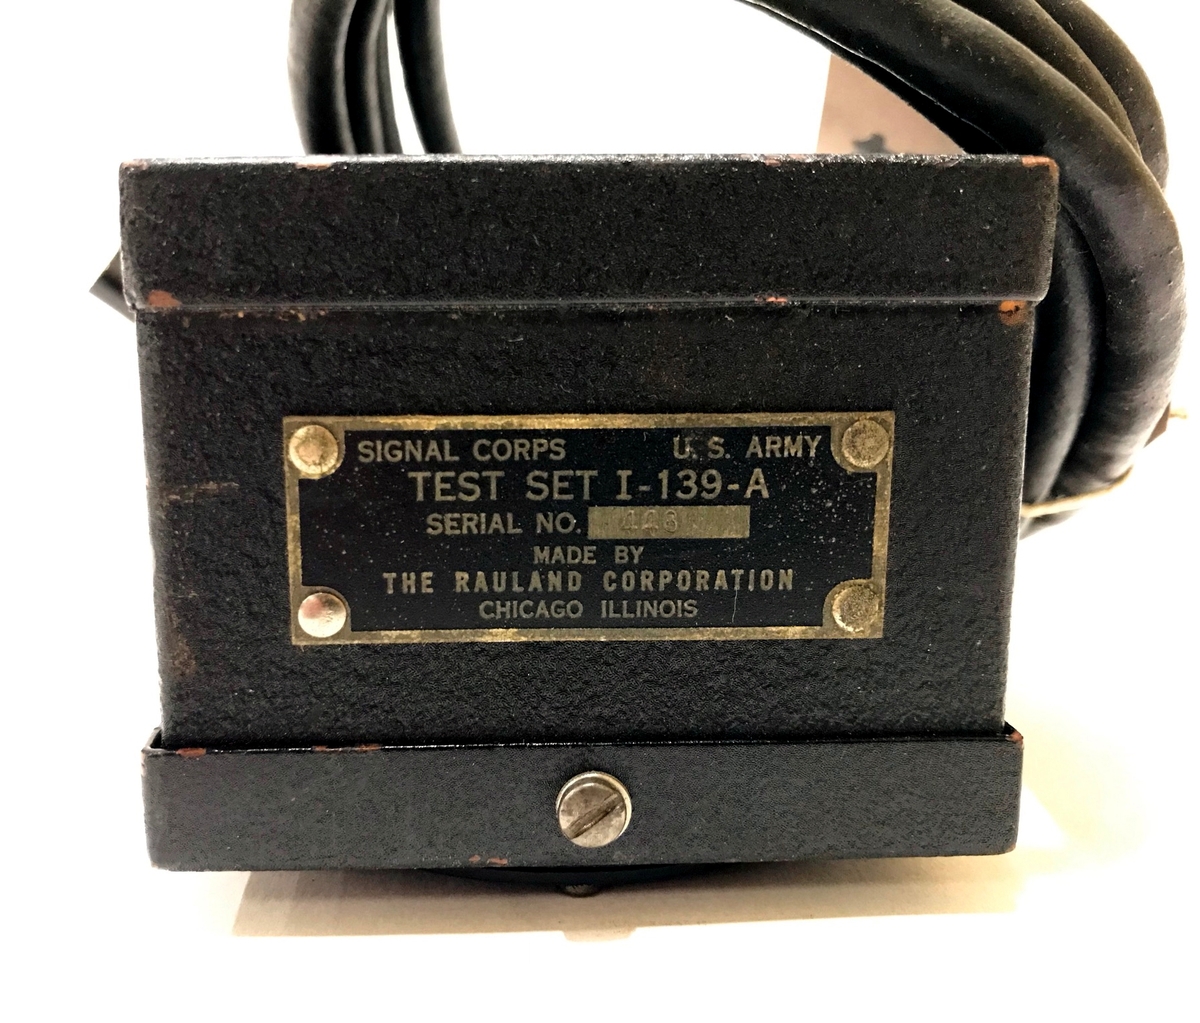 Amperemeter, US Army Signal Corps Test Set I-139-A. Svart, frostlackat metallhölje, skala 0-1 mA. Tillverkare: The Rauland Corporation, Chicago, Ill, USA.